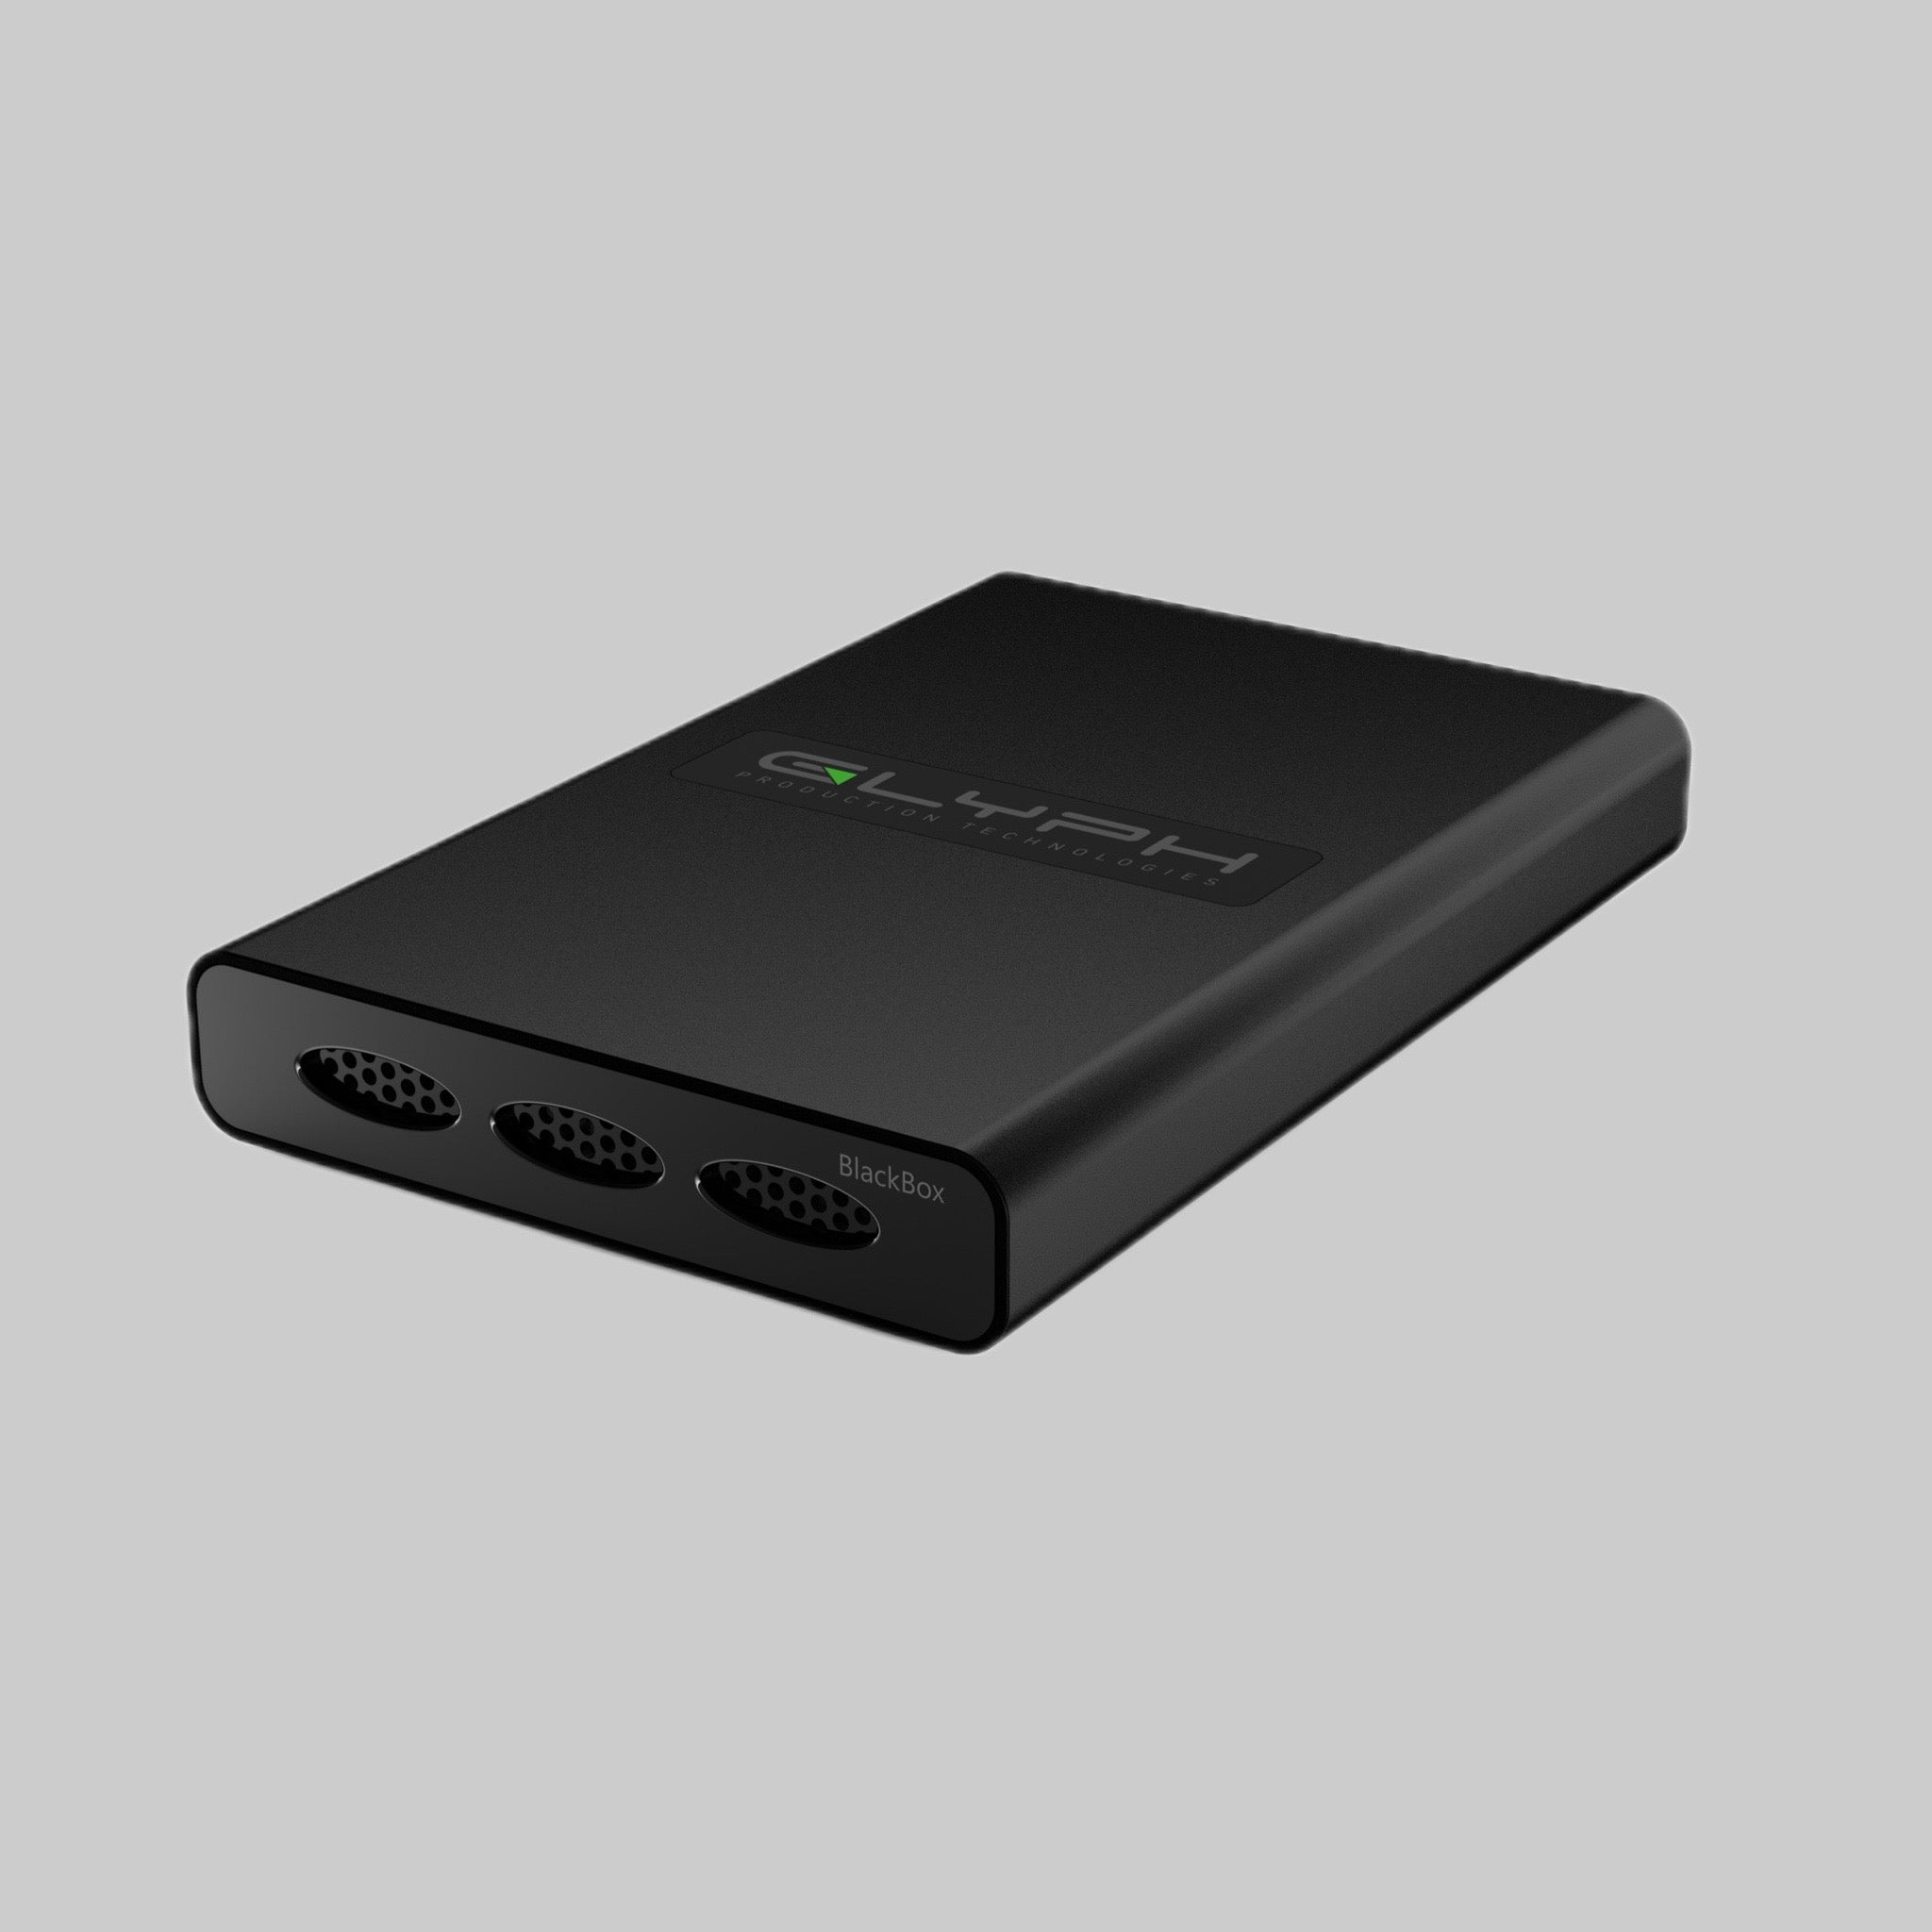 Glyph blackbox portable hard drive 